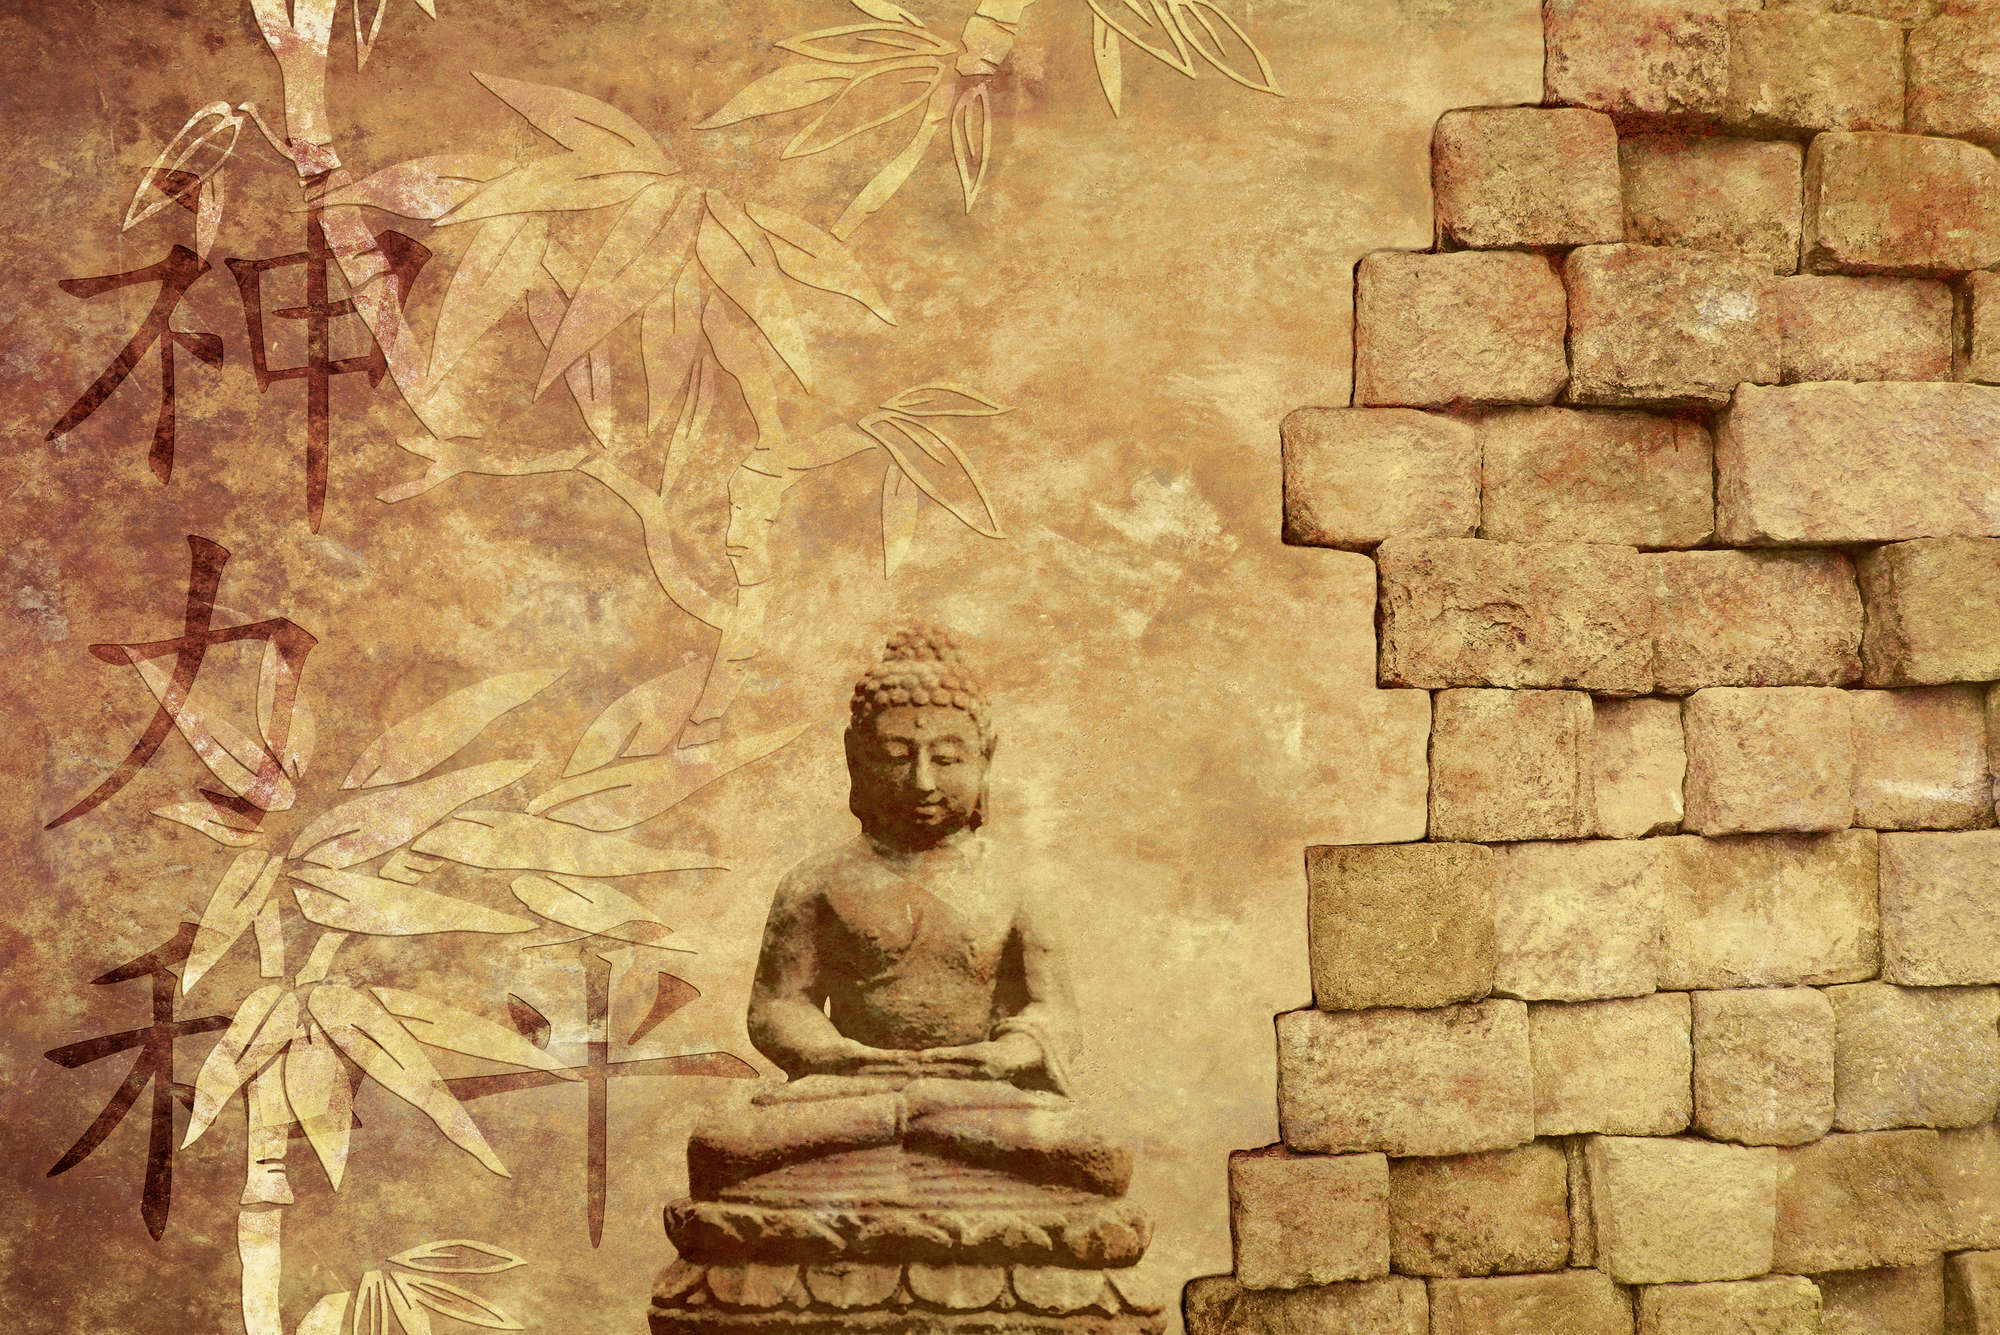             Fototapete Mauer mit Buddha-Figur – Mattes Glattvlies
        